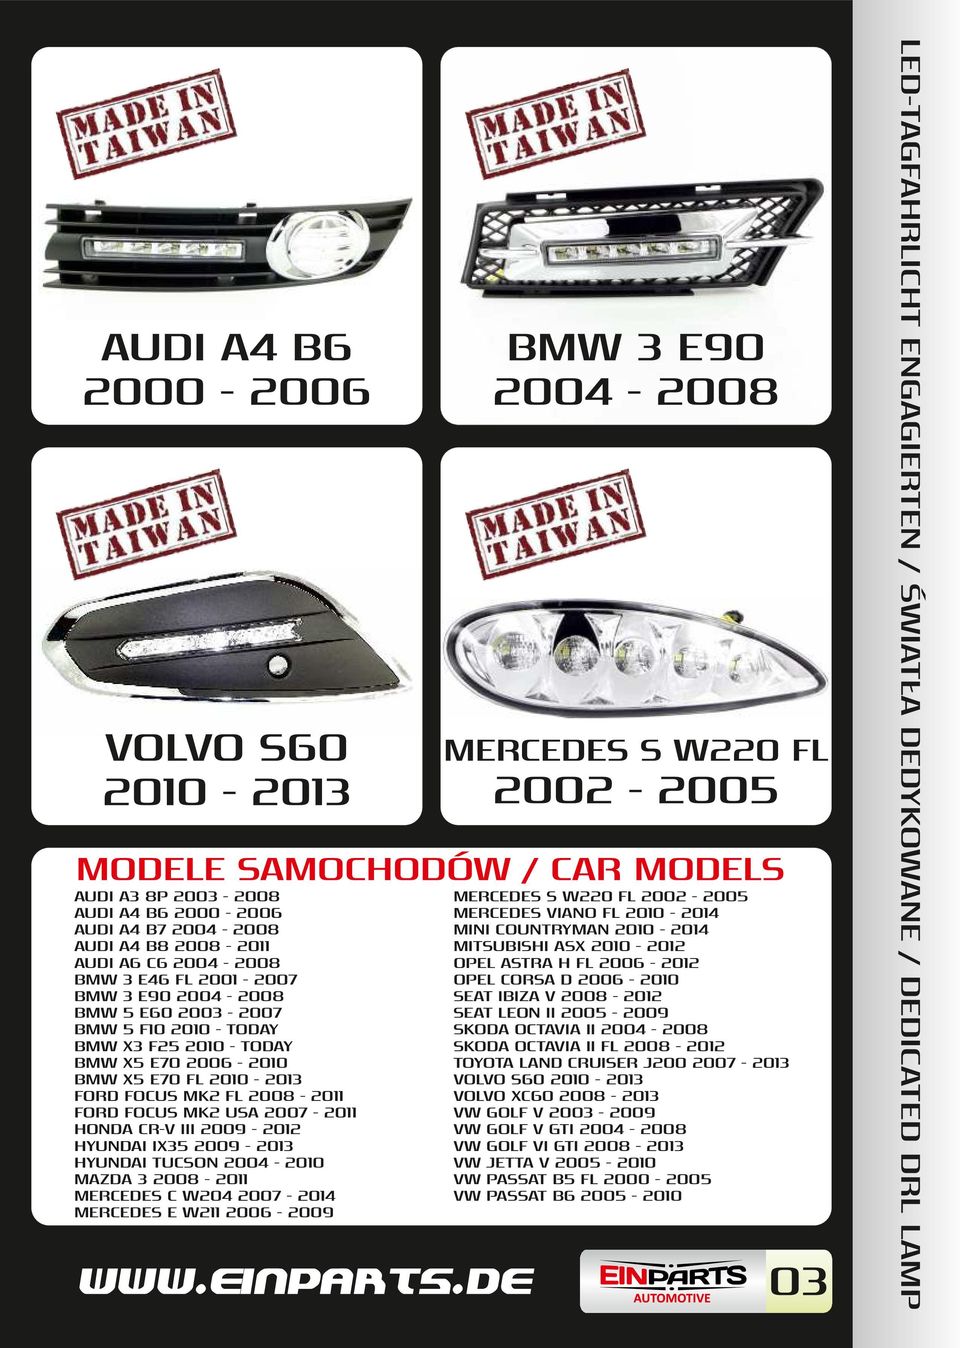 GTI 2008-2013 VW JETTA V 2005-2010 VW PASSAT B5 FL 2000-2005 VW PASSAT B6 2005-2010 LED-TAGFAHRLICHT ENGAGIERTEN / ŚWIATŁA DEDYKOWANE / DEDICATED DRL LAMP AUDI A3 8P 2003-2008 AUDI A4 B6 2000-2006